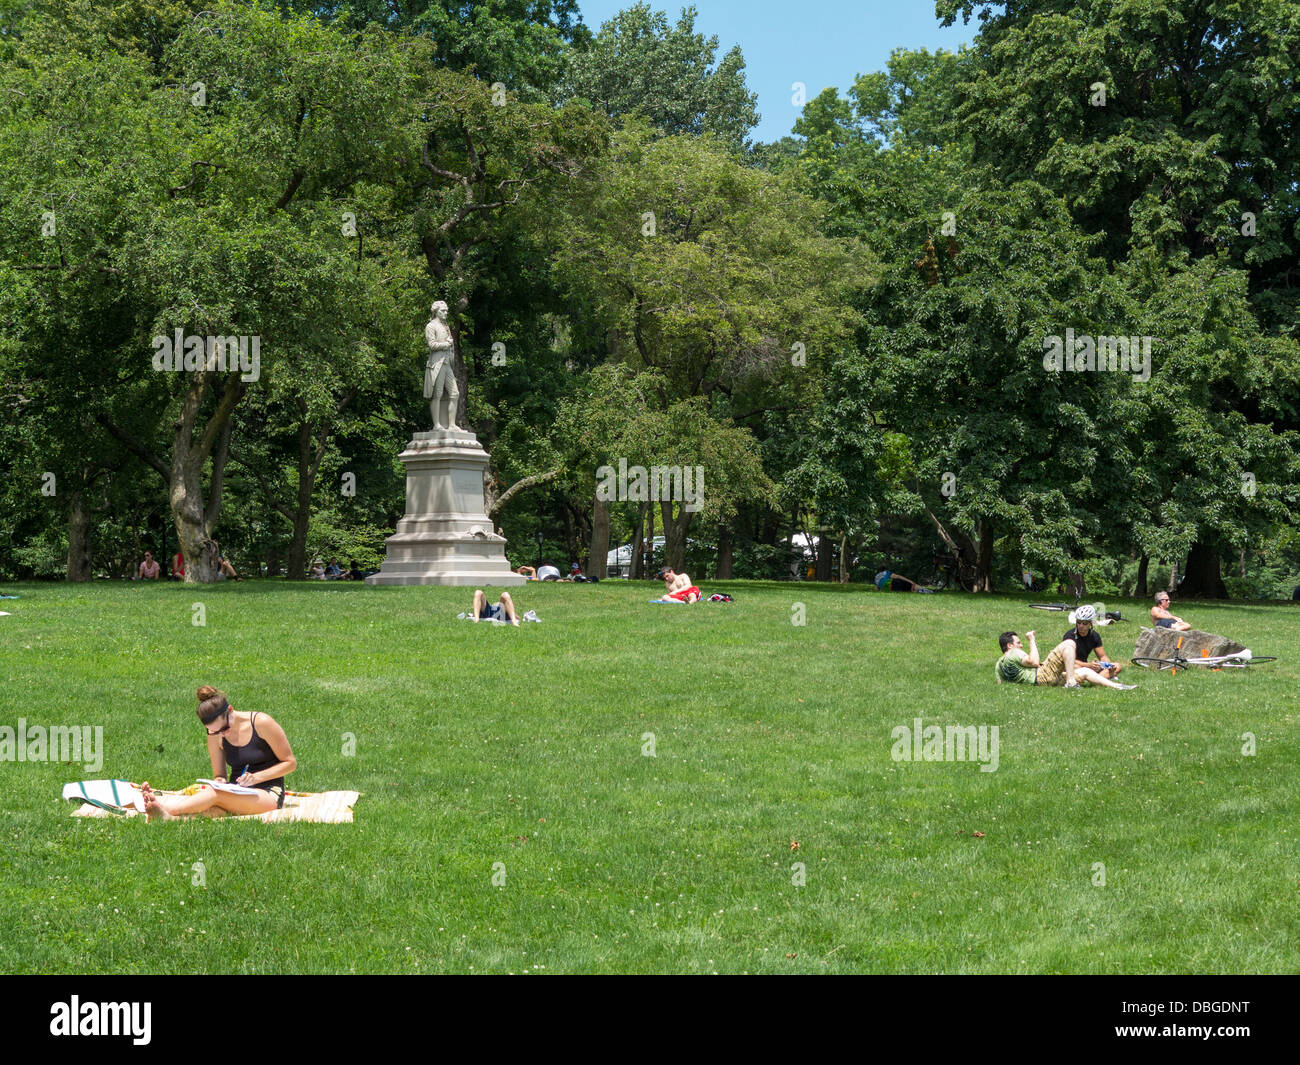 Sunbathing in Central Park, New York City Stock Photo - Alamy